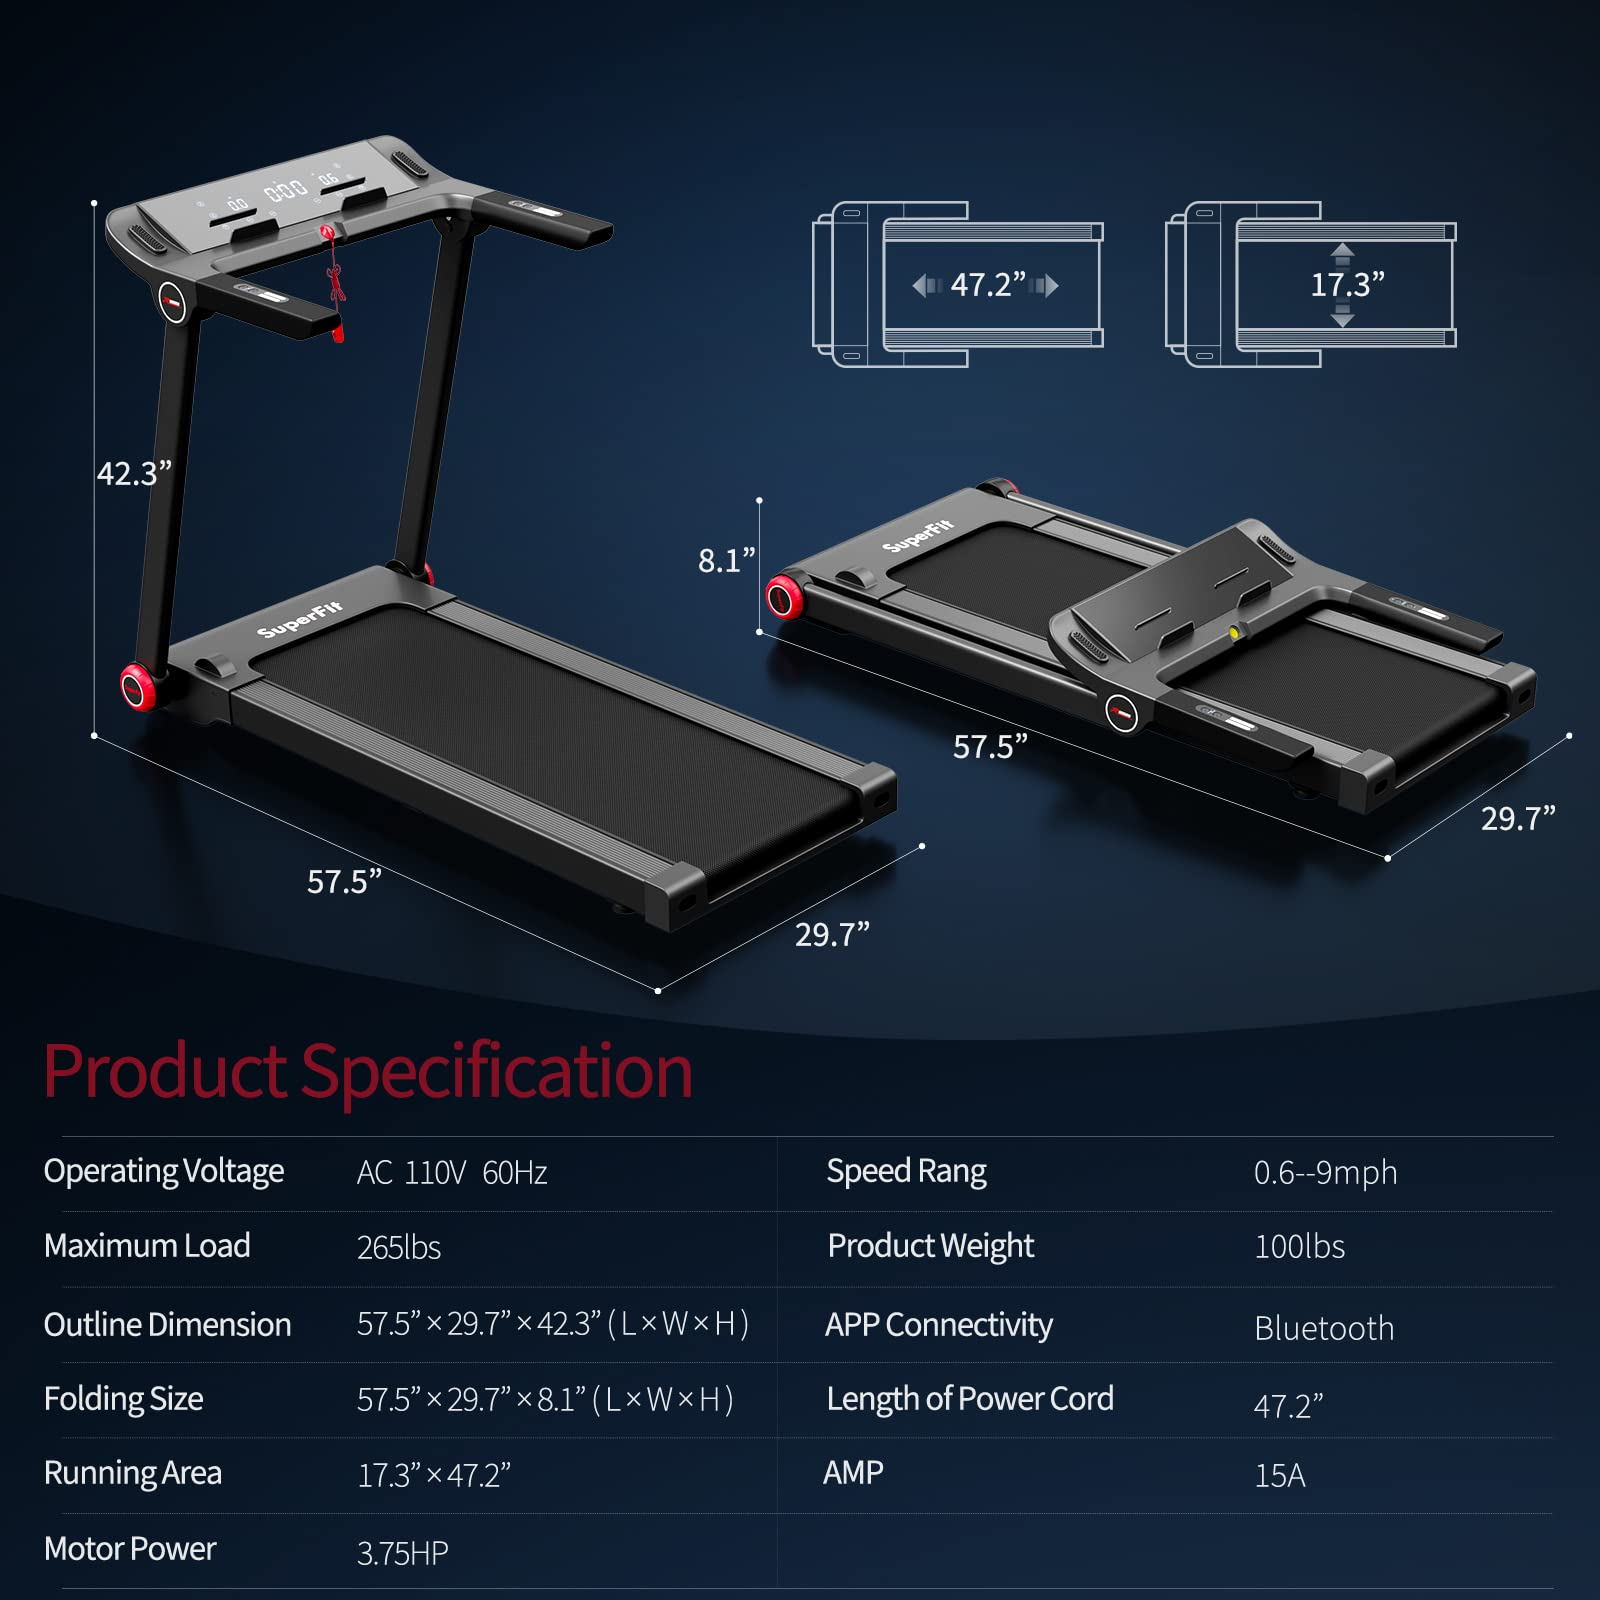 Goplus 3.75HP Folding Treadmill, Freestanding Superfit Treadmill with APP, 12 Preset Programs